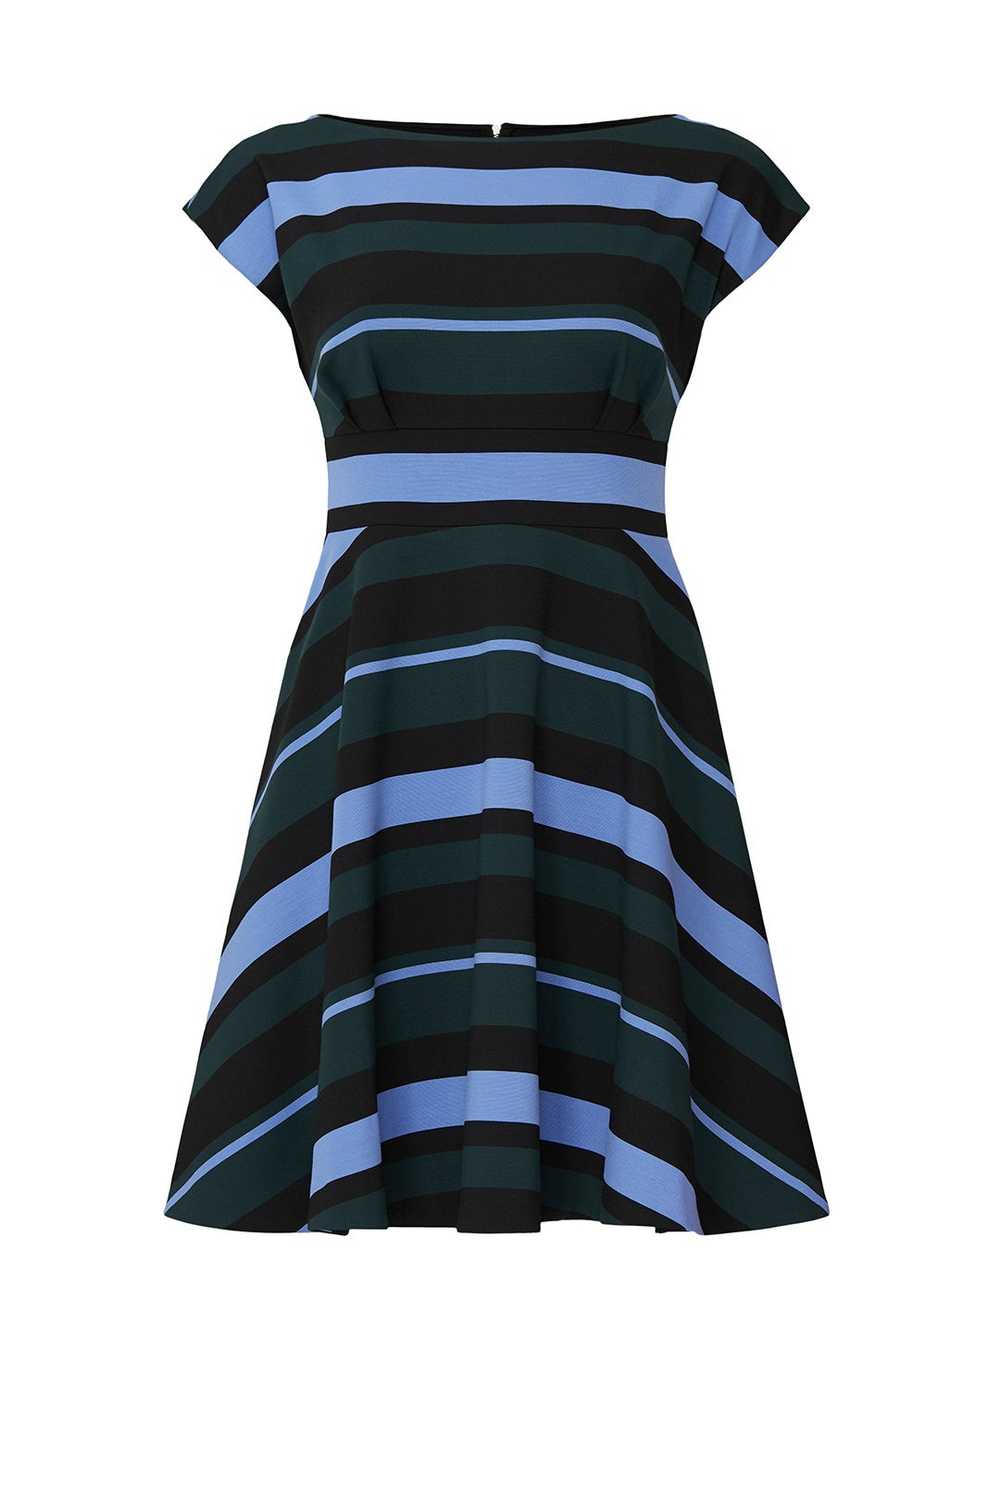 kate spade new york Stripe Ponte Fiorella Dress - image 5